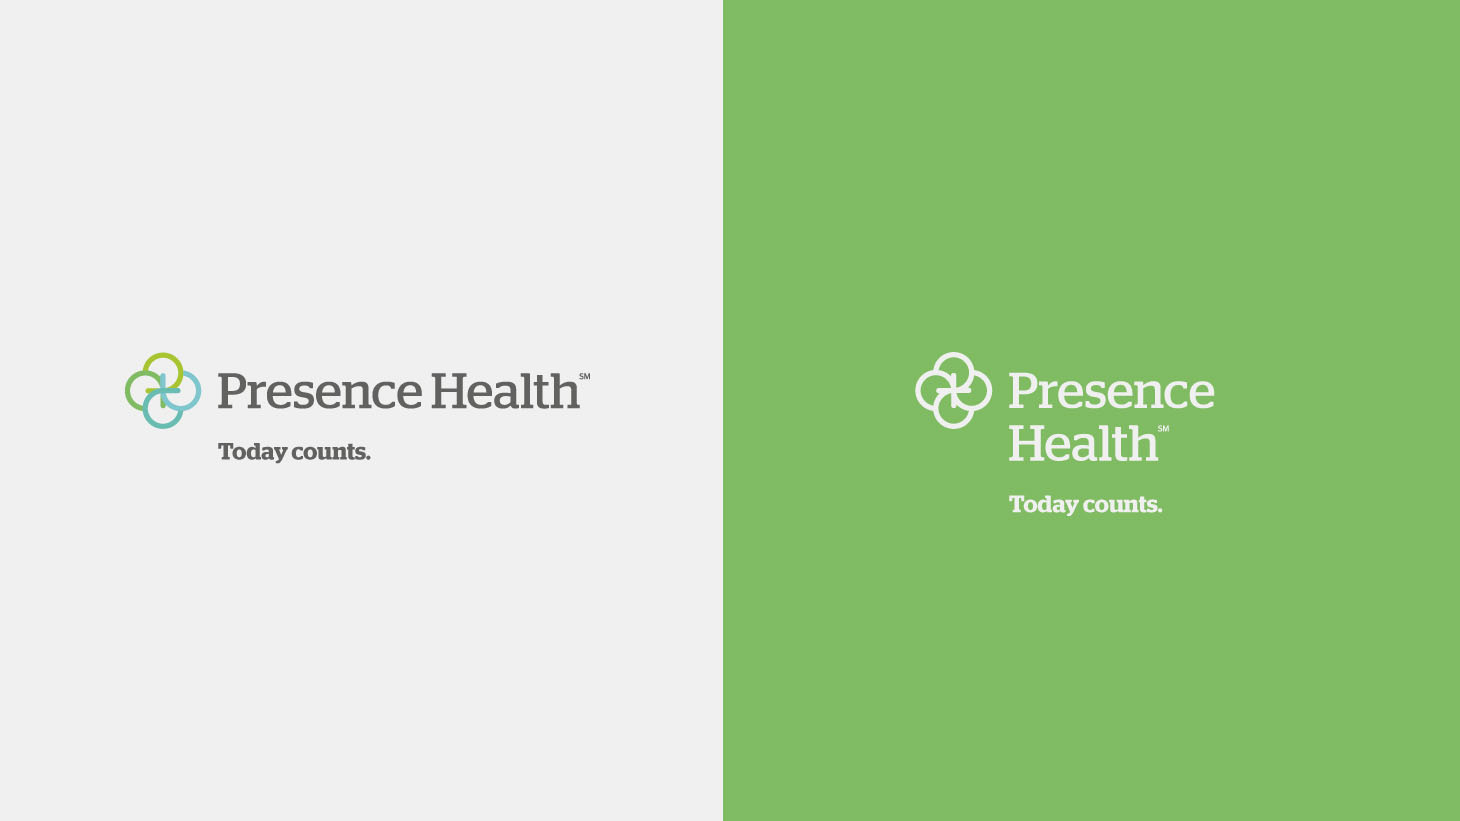 Presence Health logo reversed